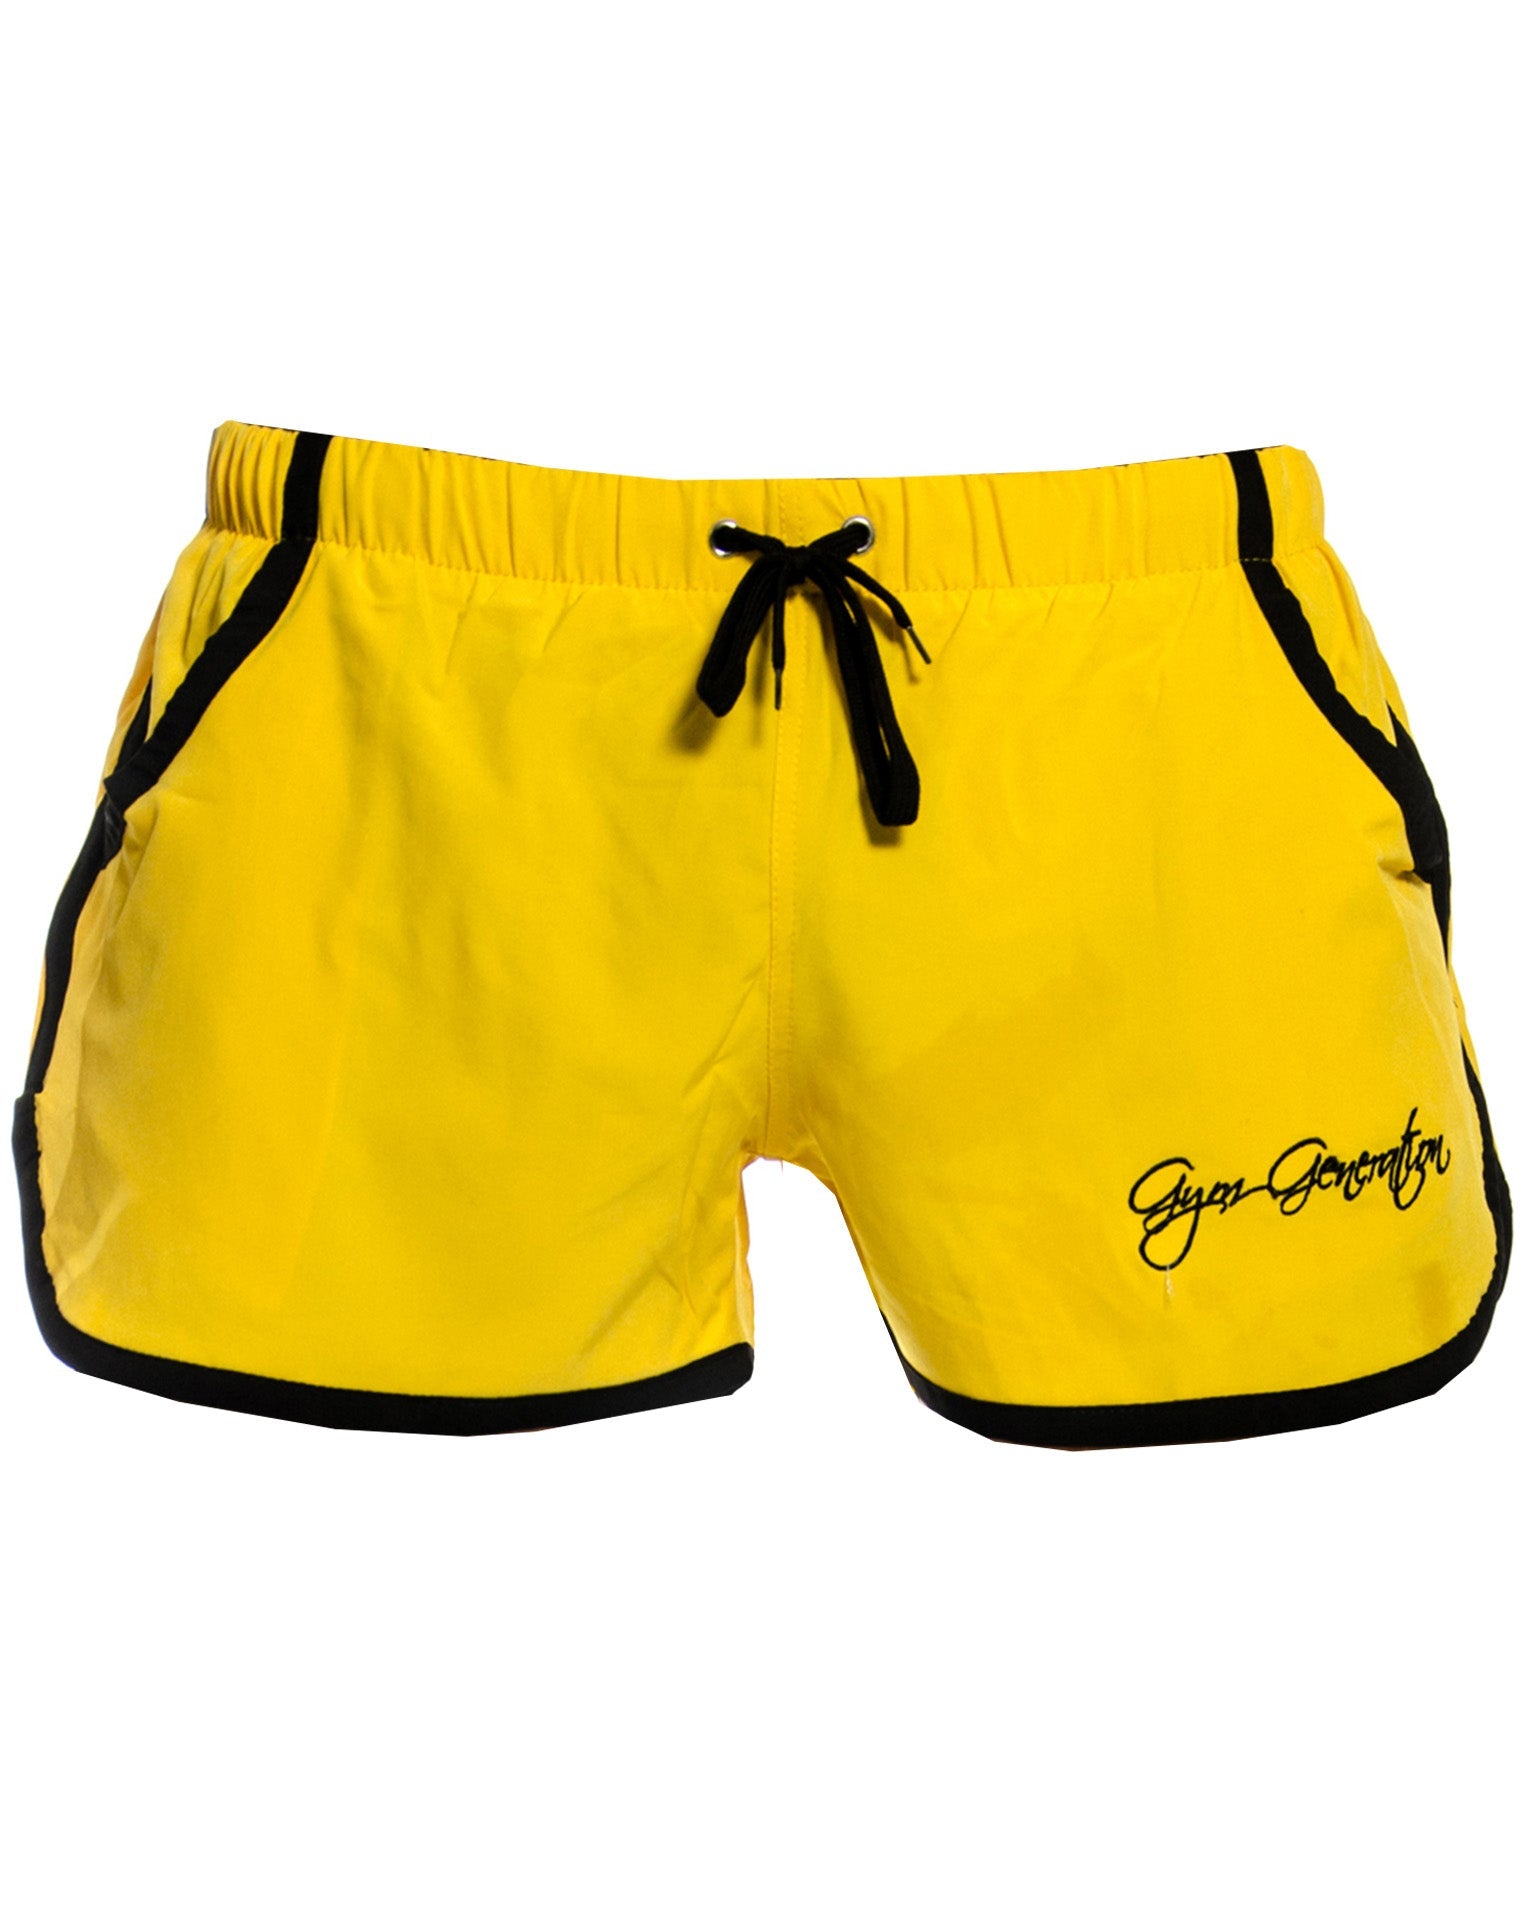 Short Zyzz sport shorts for men – Gym Generation®